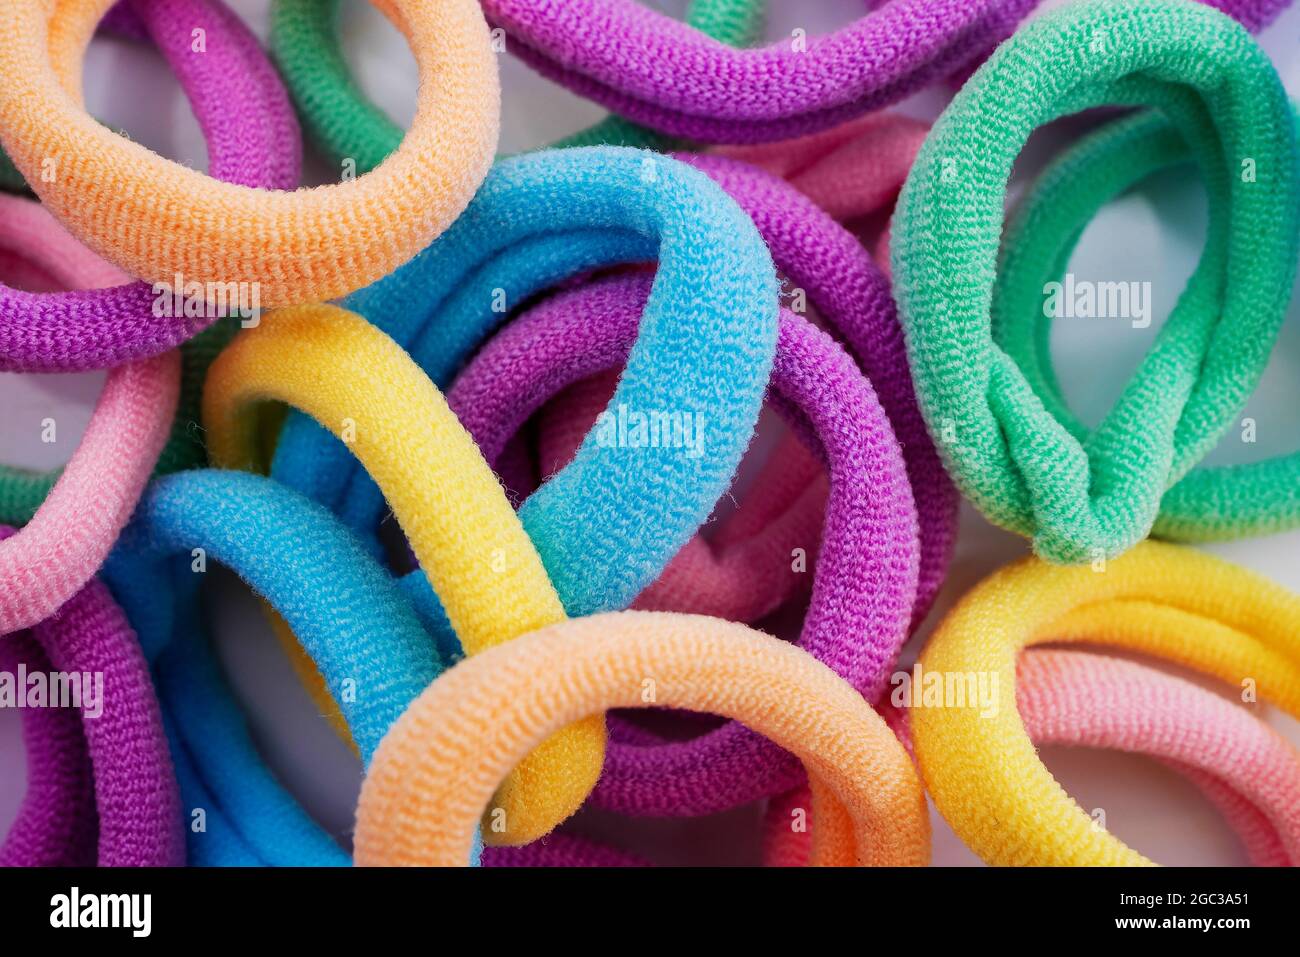 Closeup of various hair ties. Macro of multicolored elastics Stock Photo